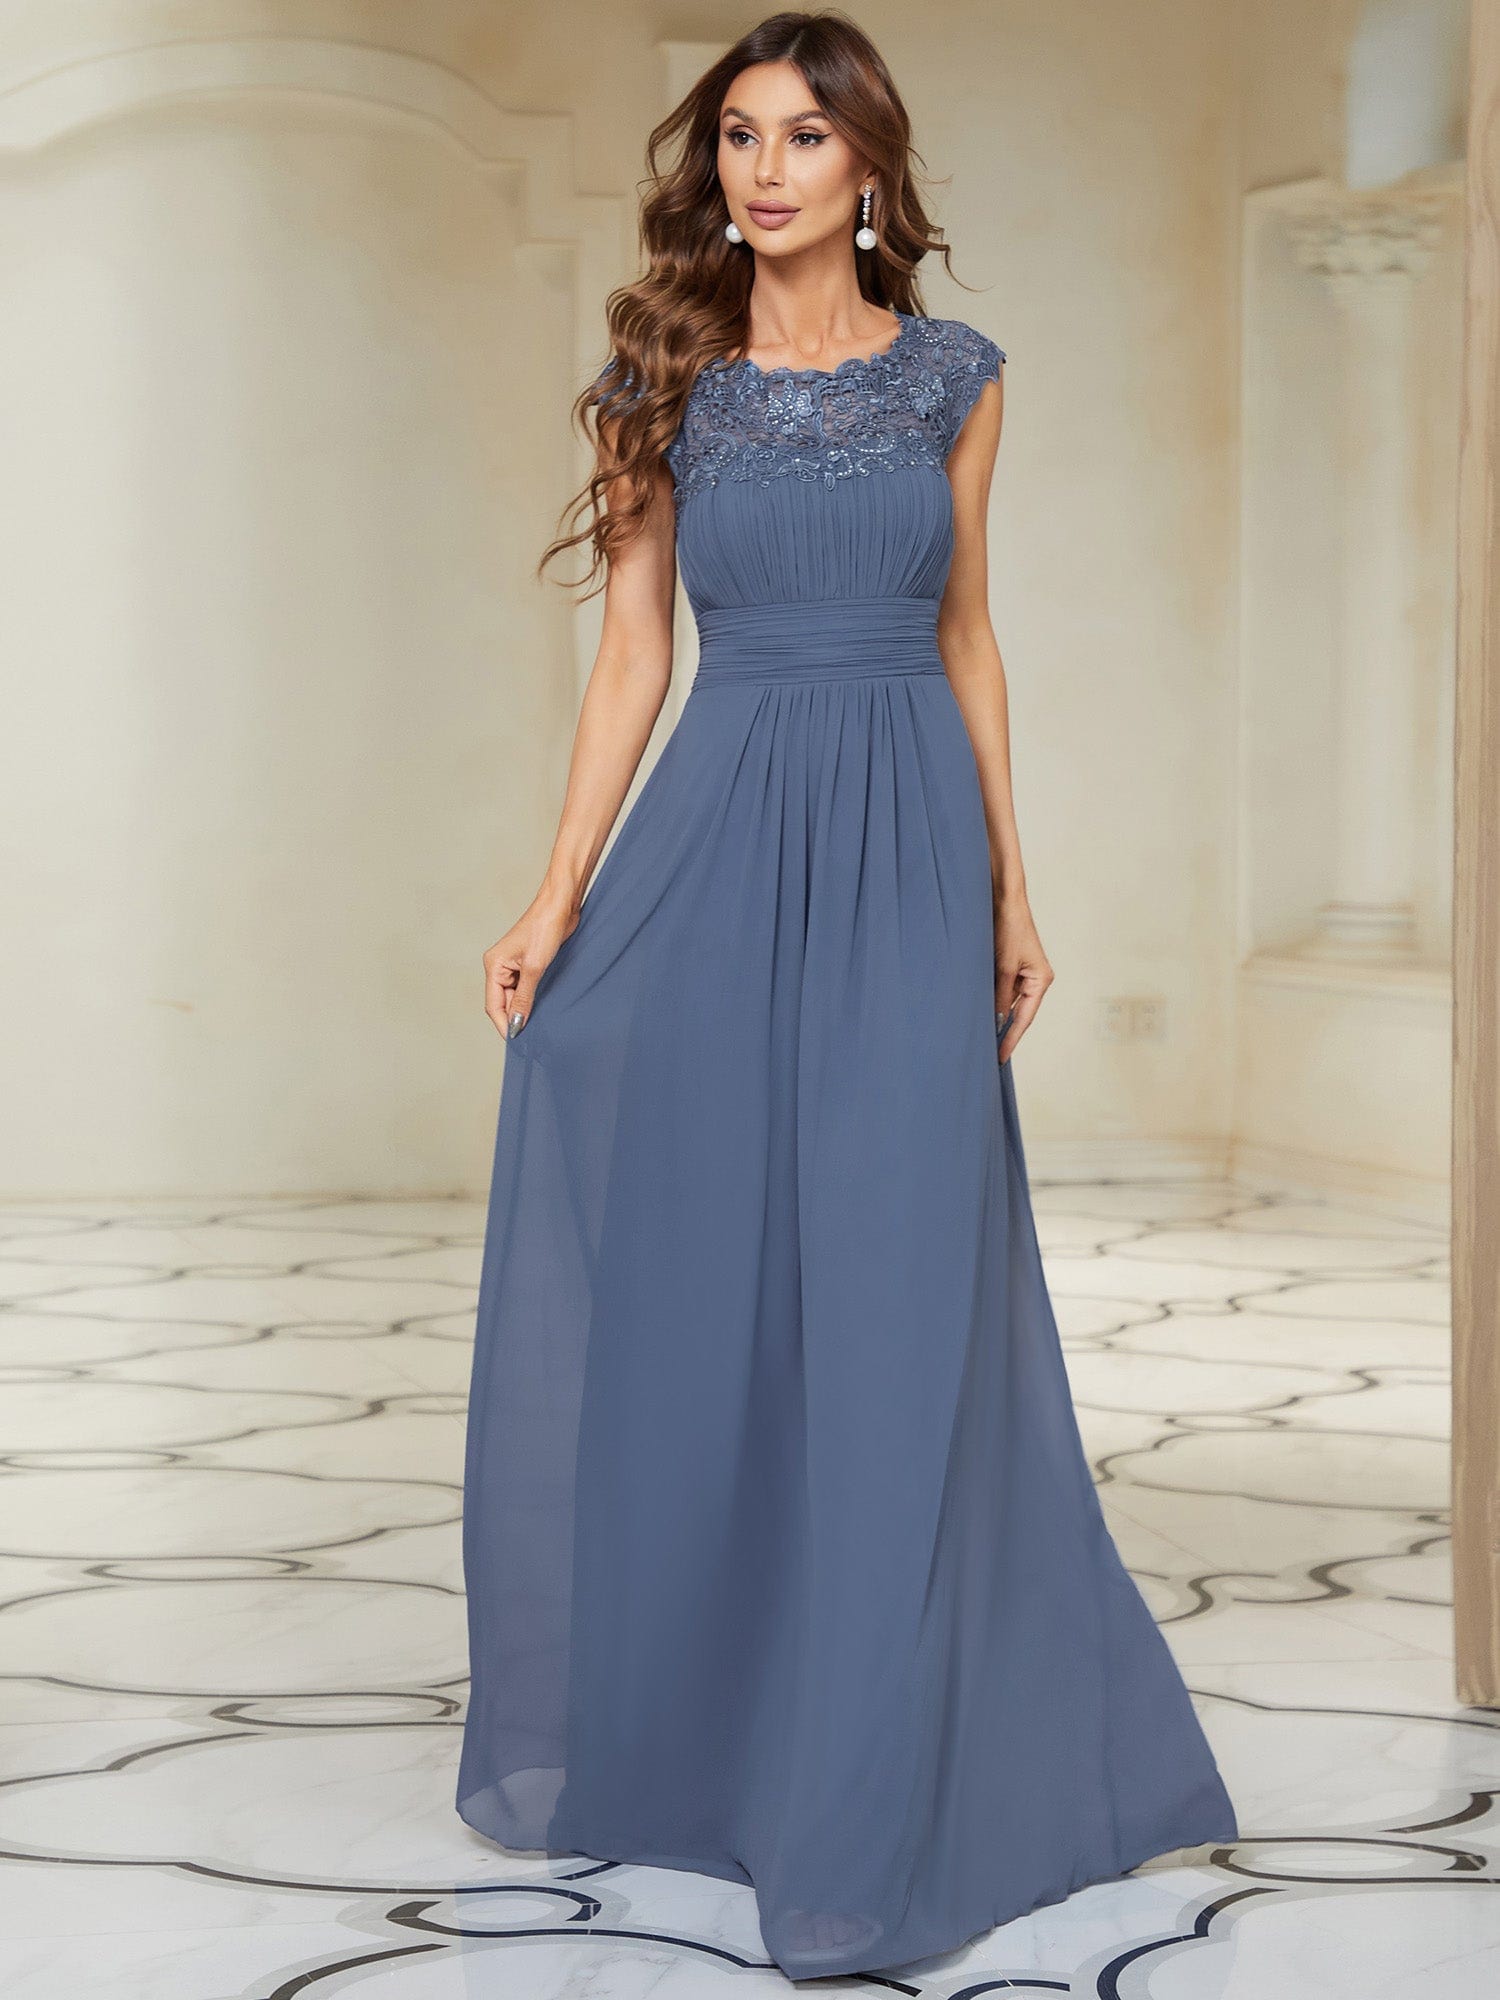 MsDresslyEP Formal Dress Maxi Lace Cap Sleeve Long Formal Evening Dress DRE230912A2613DNV4